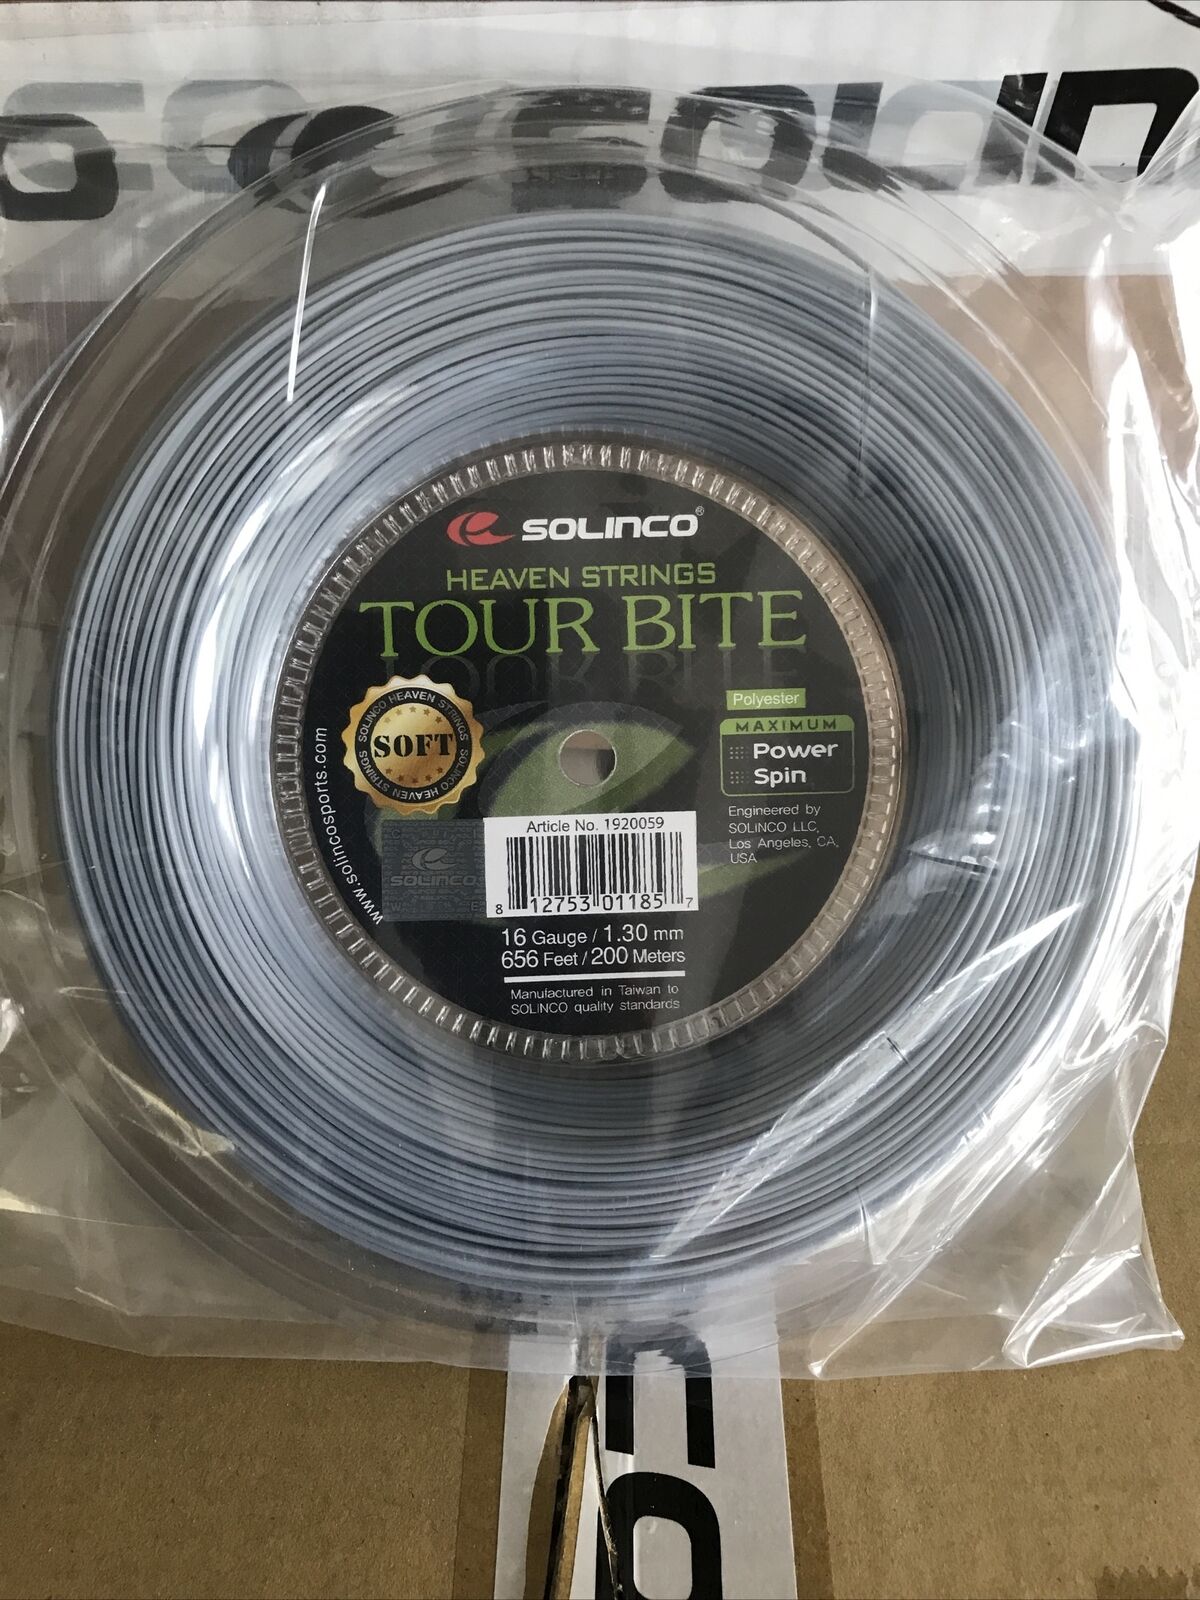 Solinco Tour Bite Soft 16 1.30mm 656' 200m Tennis String Reel